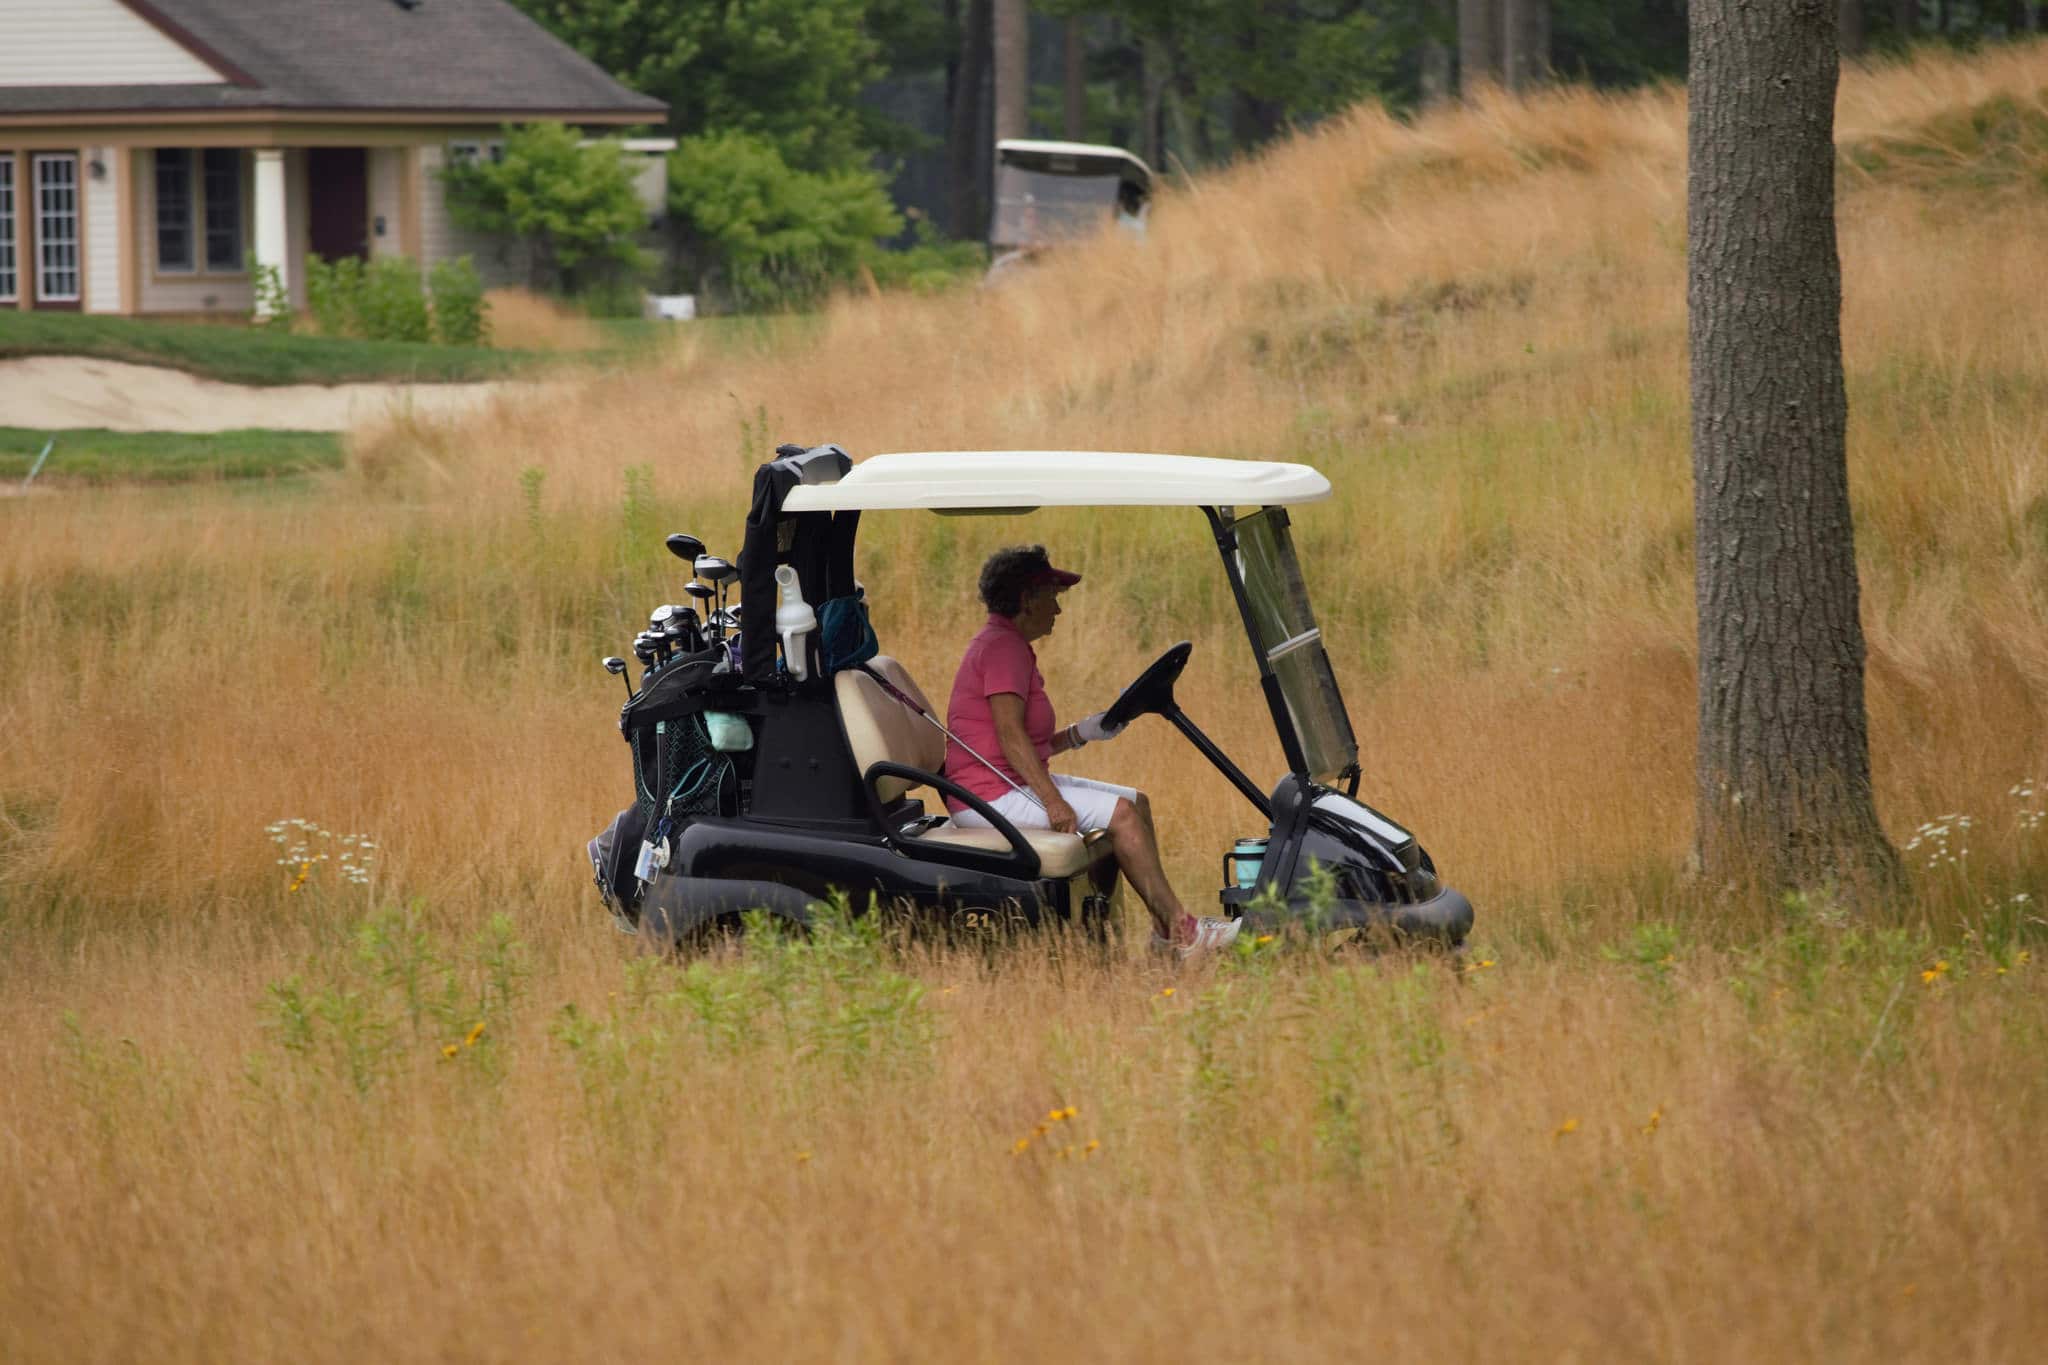 20th Annual Golf Tournament, Stranded Golf Cart